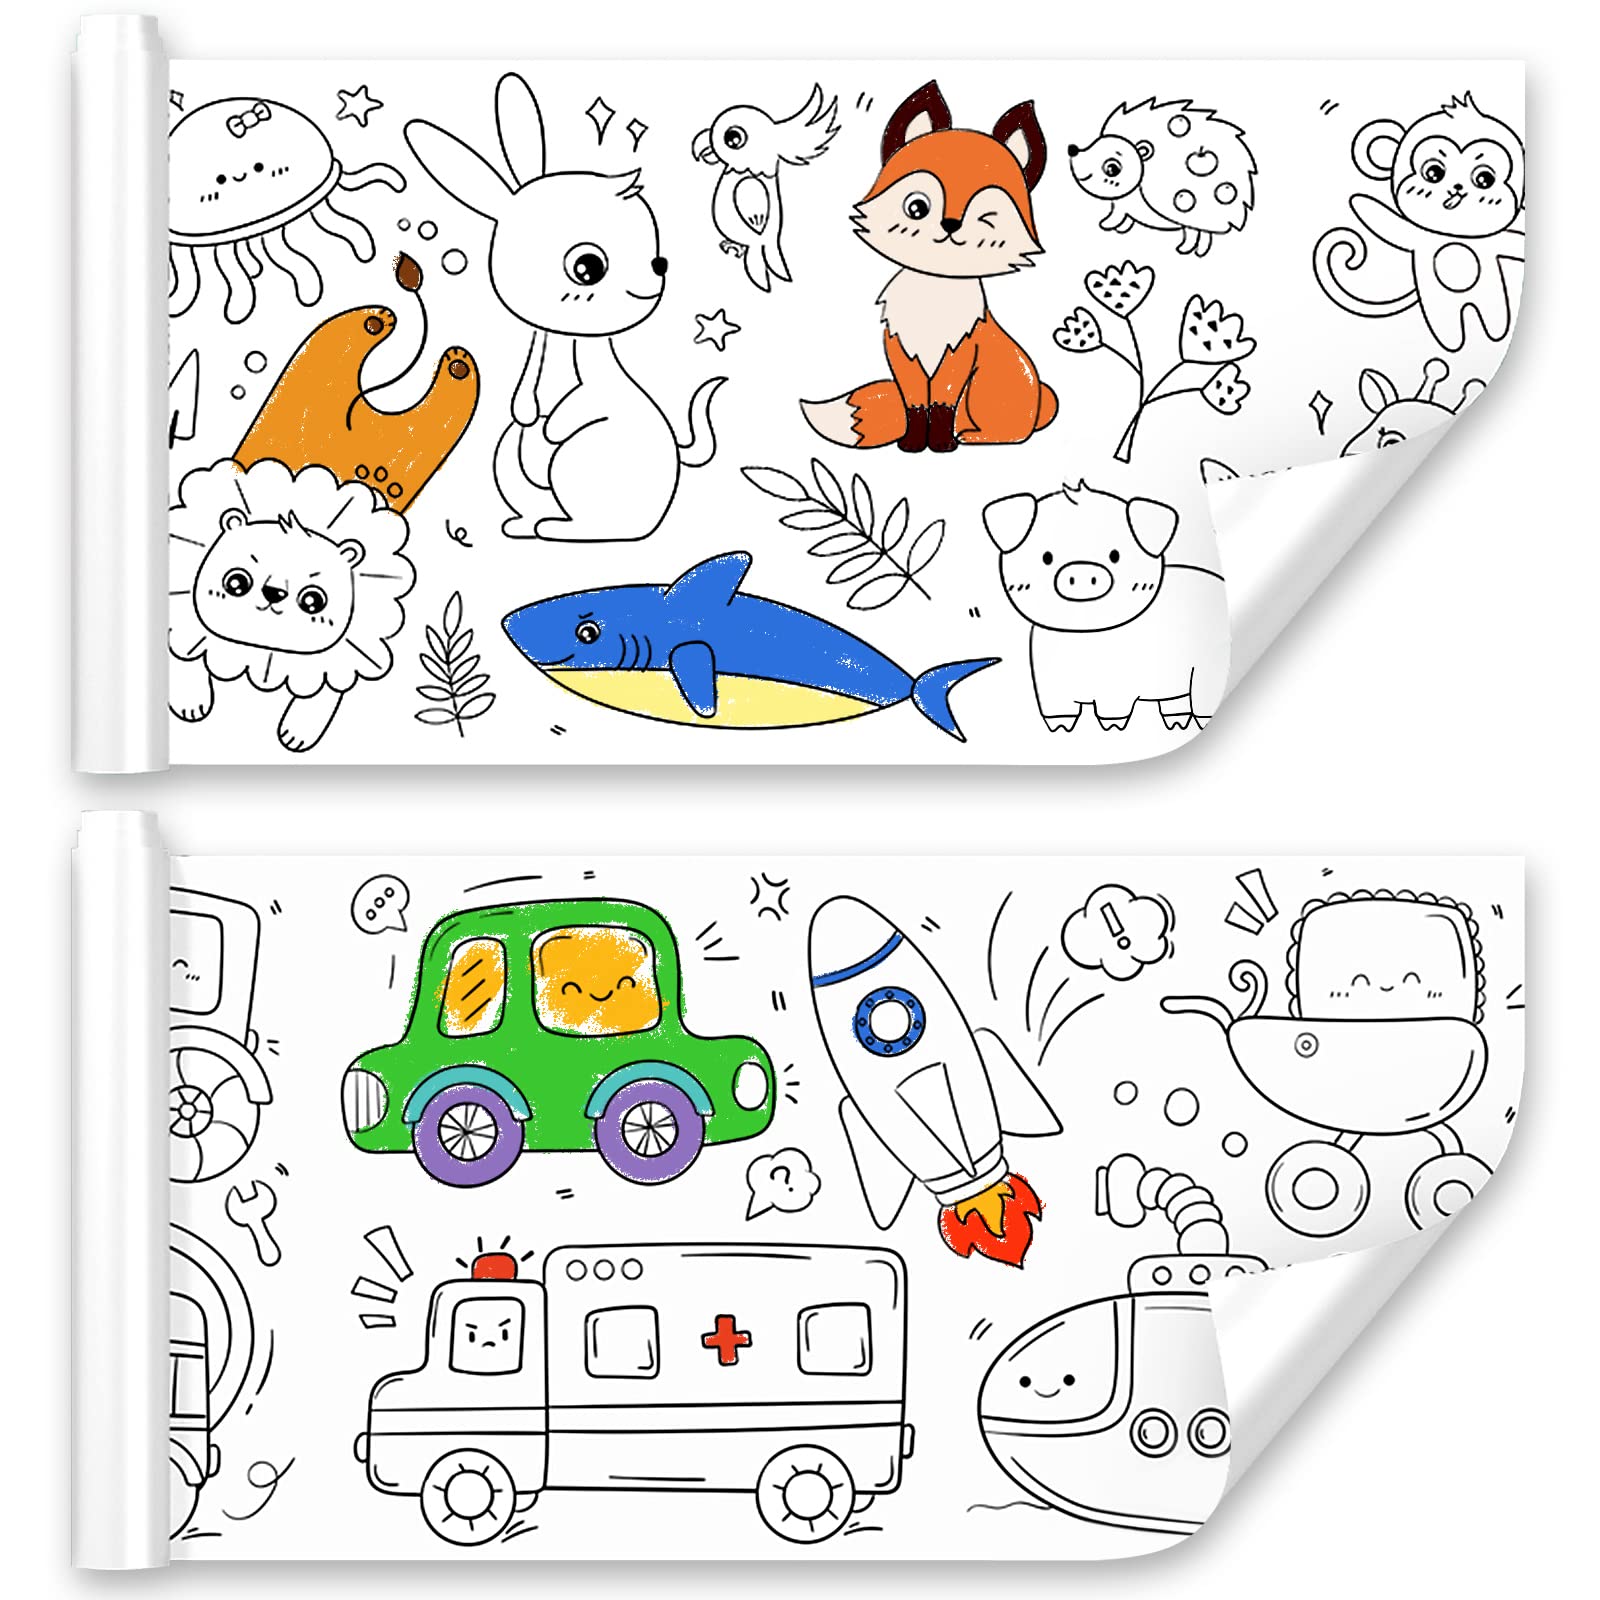 Coloring Paper Roll Wall Coloring Sheets Coloring Books Drawing Paper Roll  Coloring Poster for Children , Animal Kingdom